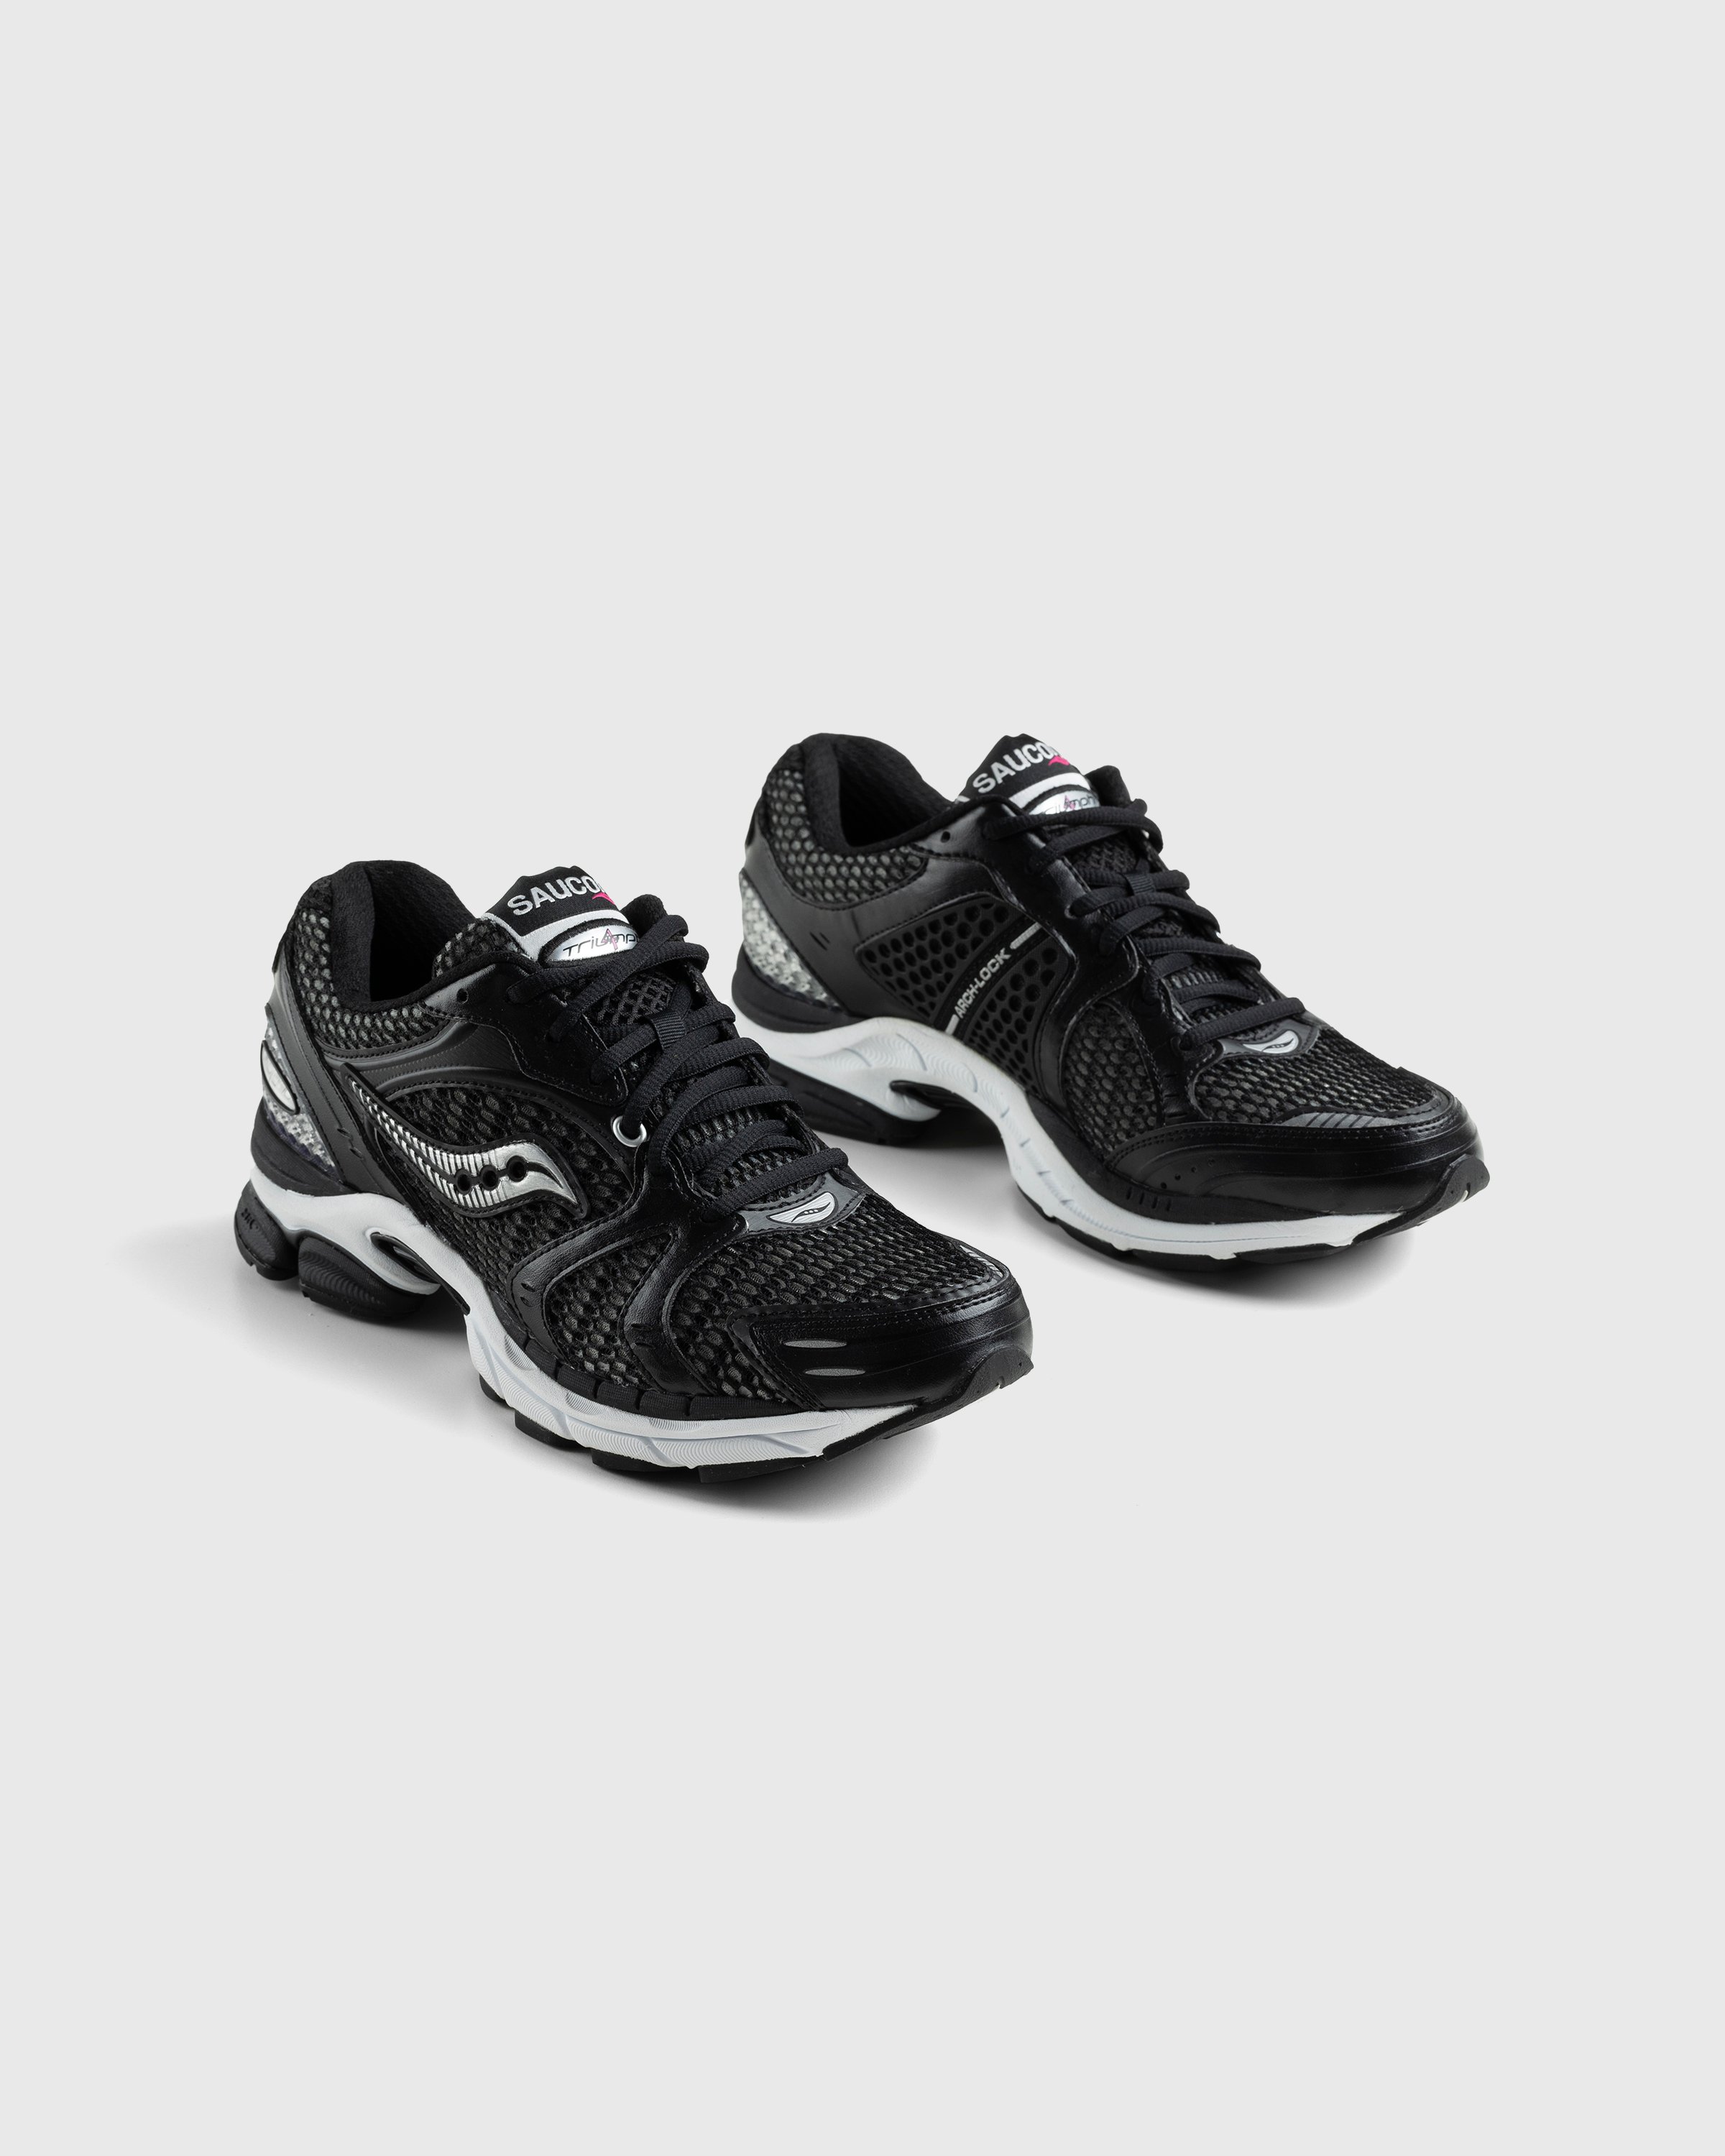 Saucony - ProGrid Triumph 4 Black - Footwear - Black - Image 3